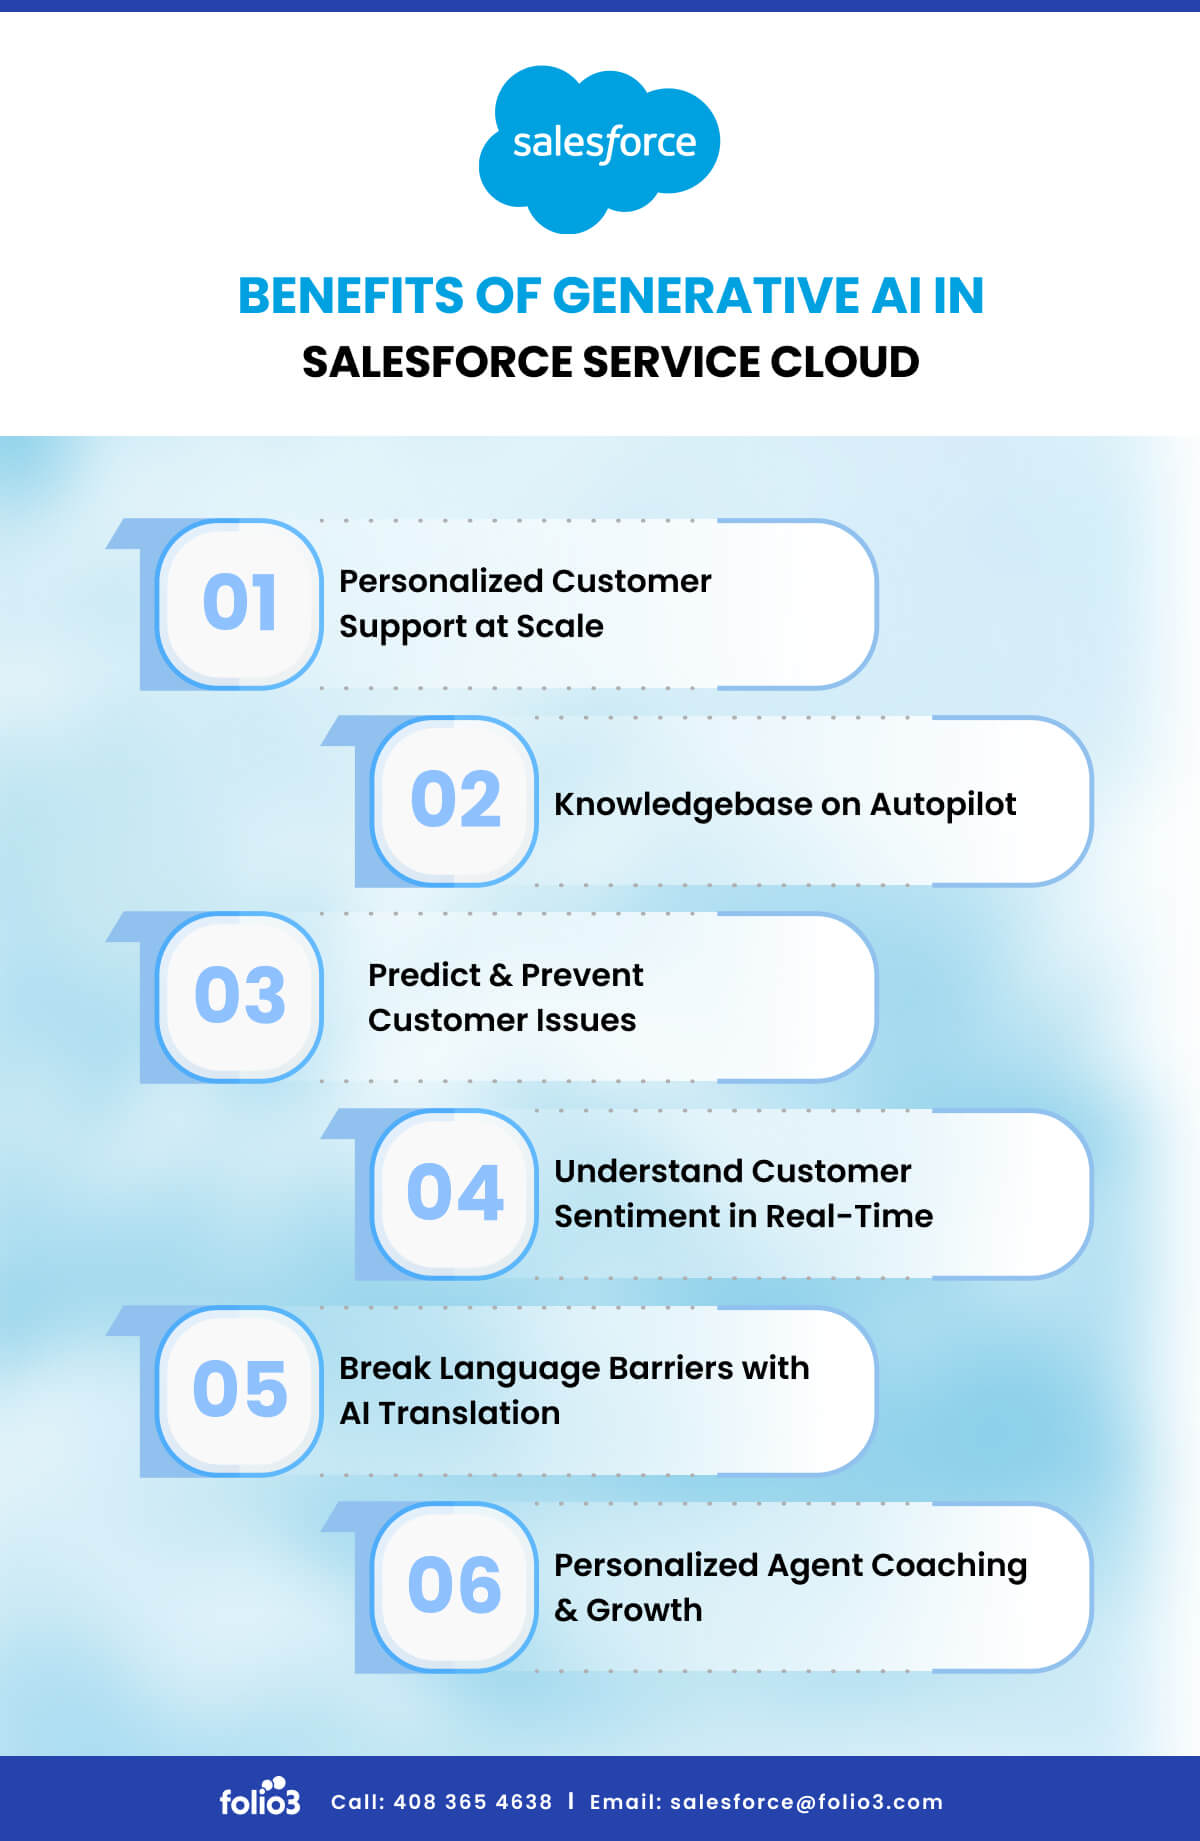 Benefits of Salesforce Service Cloud Generative AI